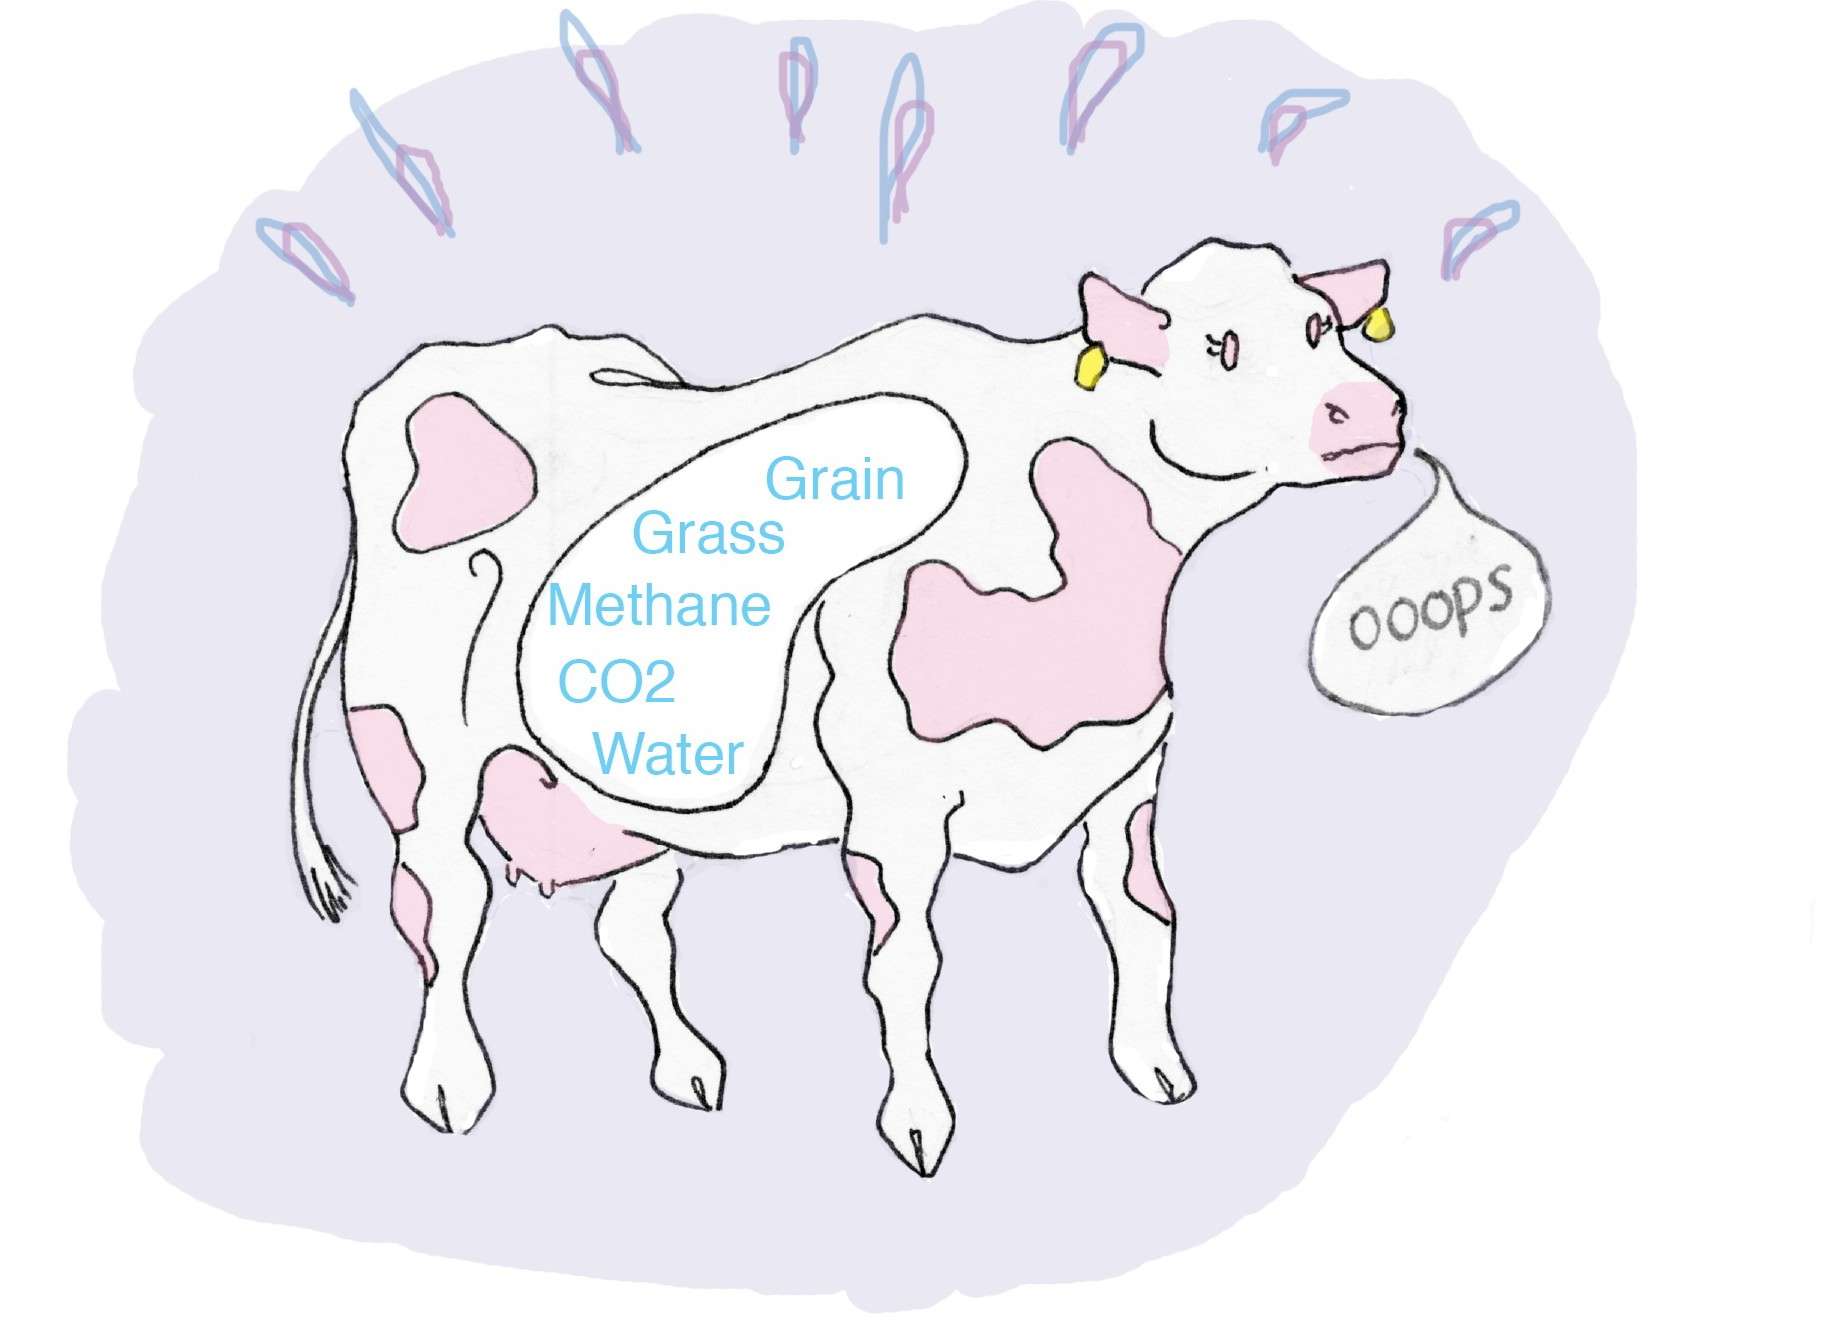 Editorial Cartoon: Cow-tastrophe